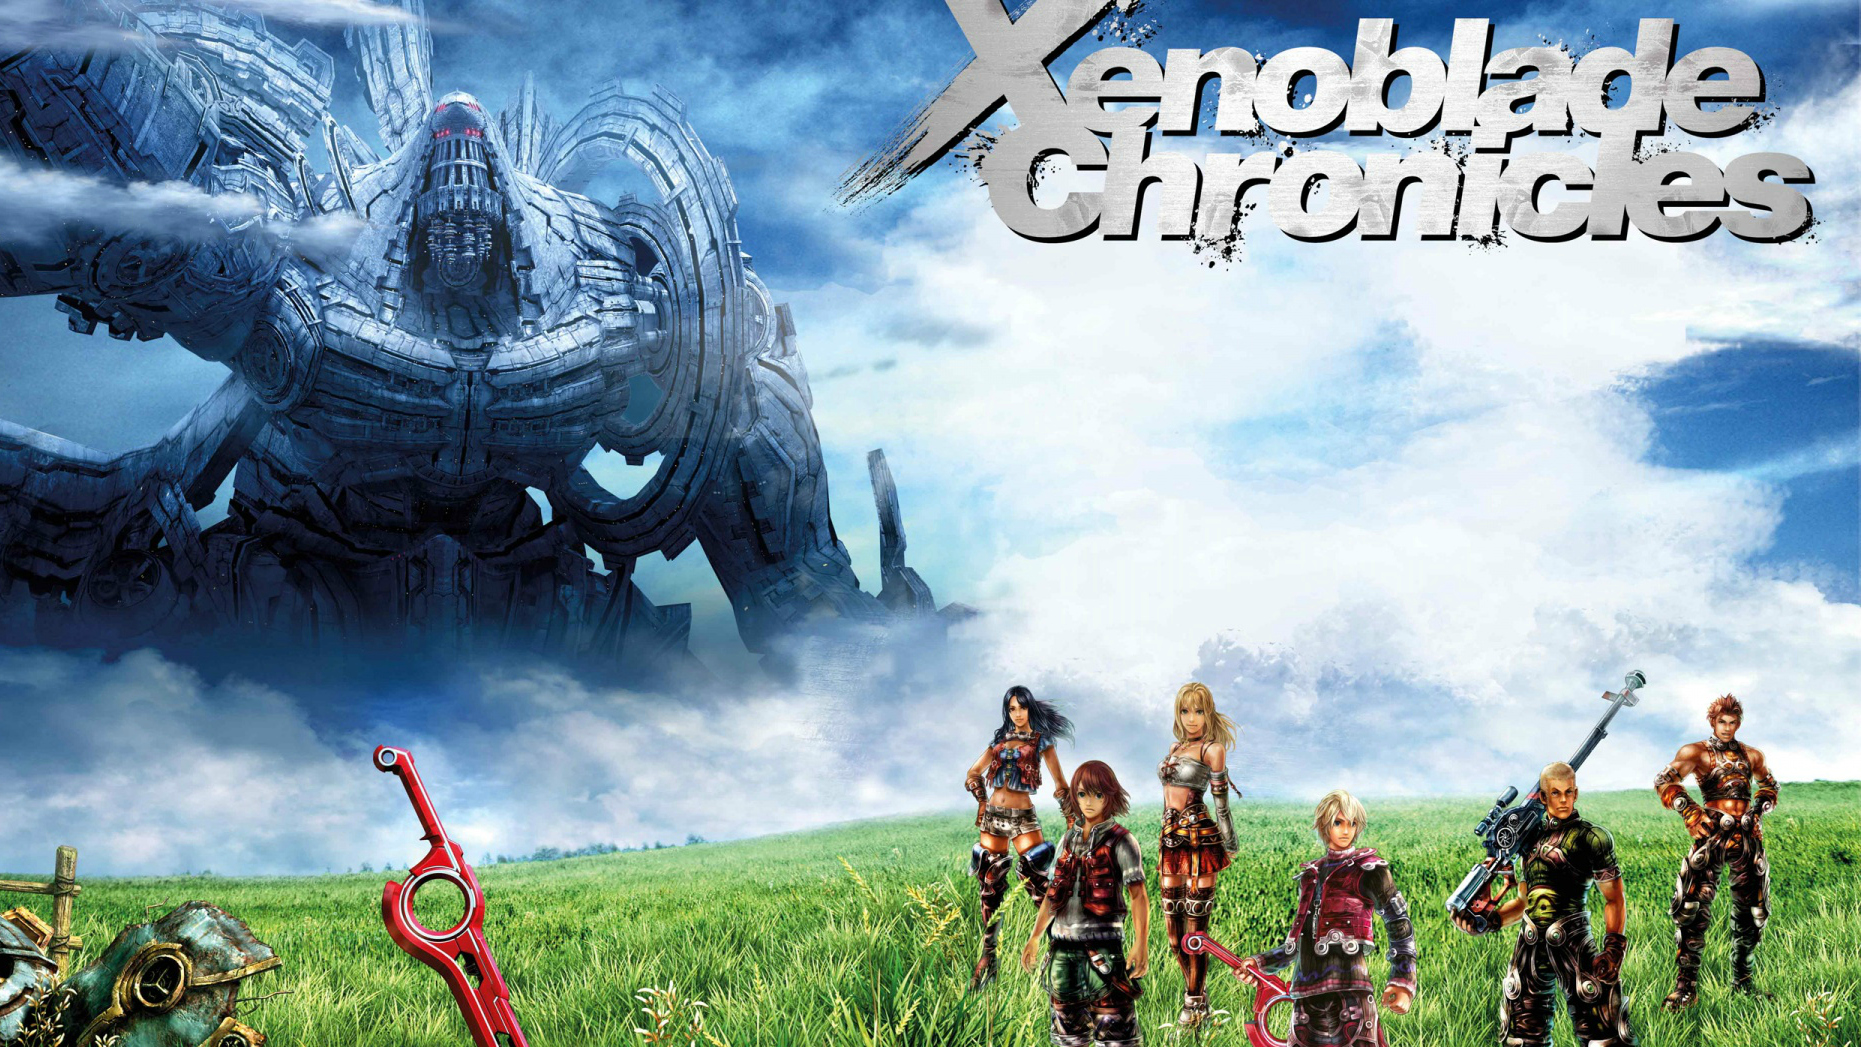 Xenoblade Chronicles, Wii U eShop Trailer